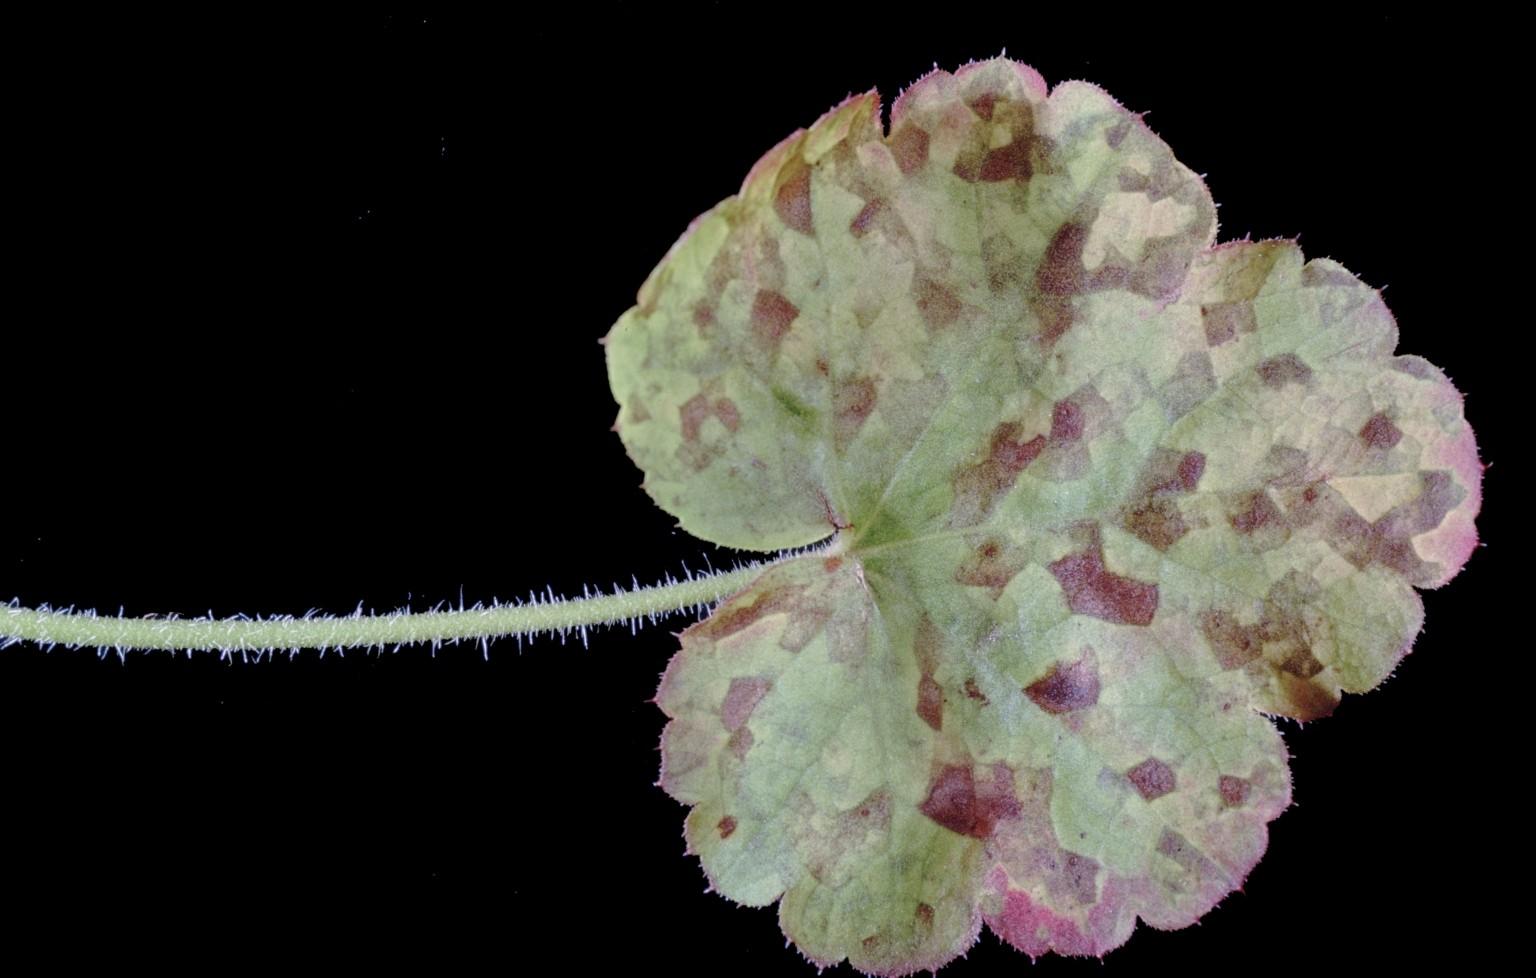 foliar nematode symptoms on coral bells